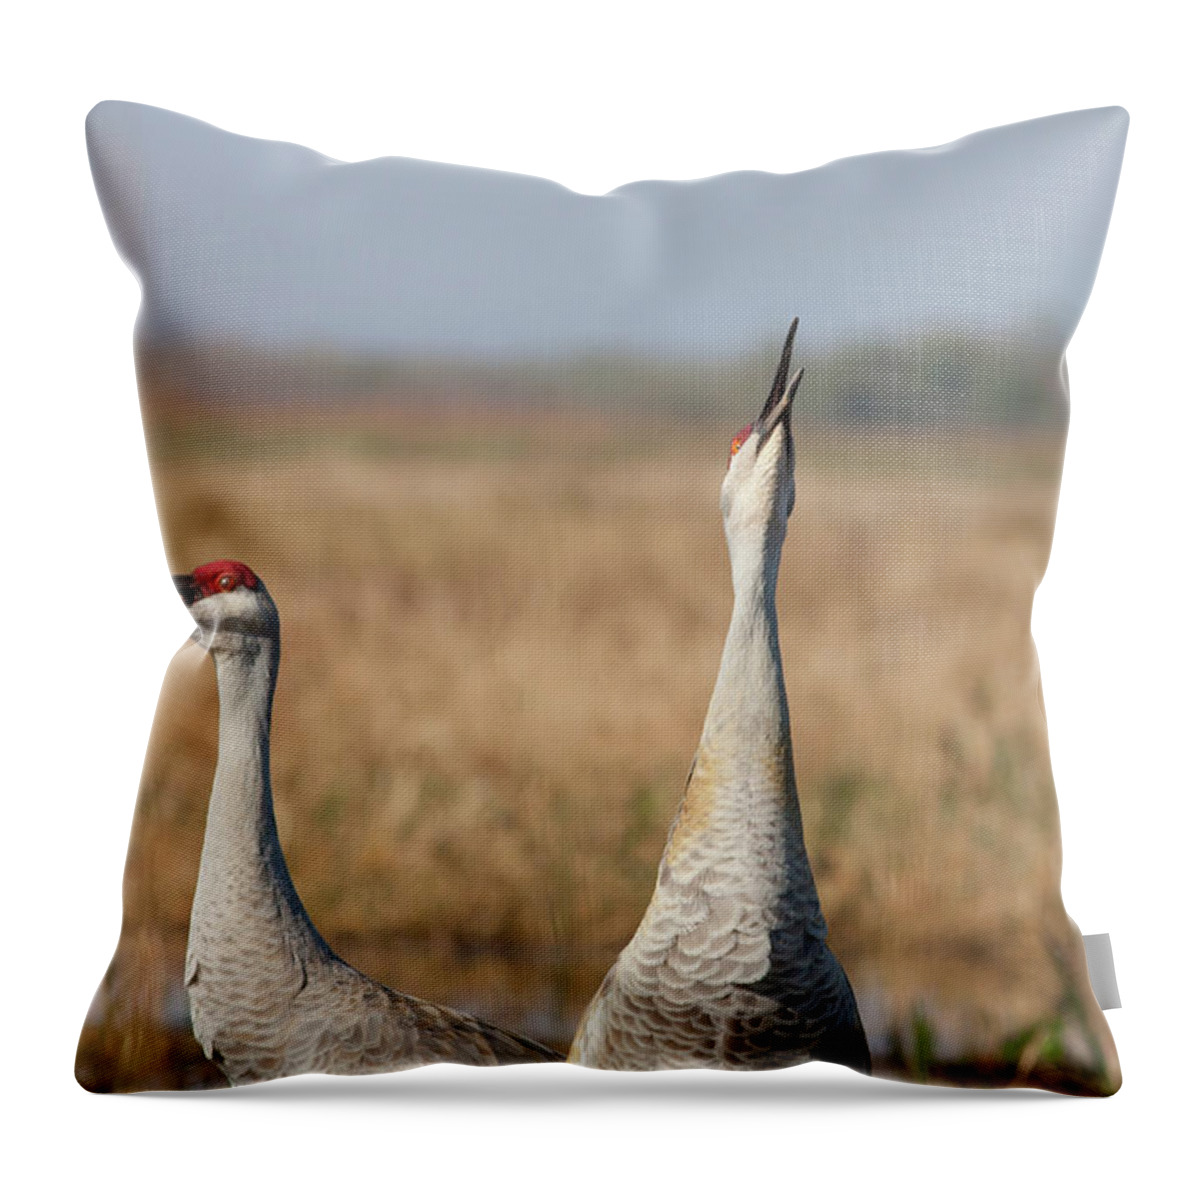 Sandhill Crane Throw Pillow featuring the photograph Sandhill Cranes Calling by Paul Rebmann